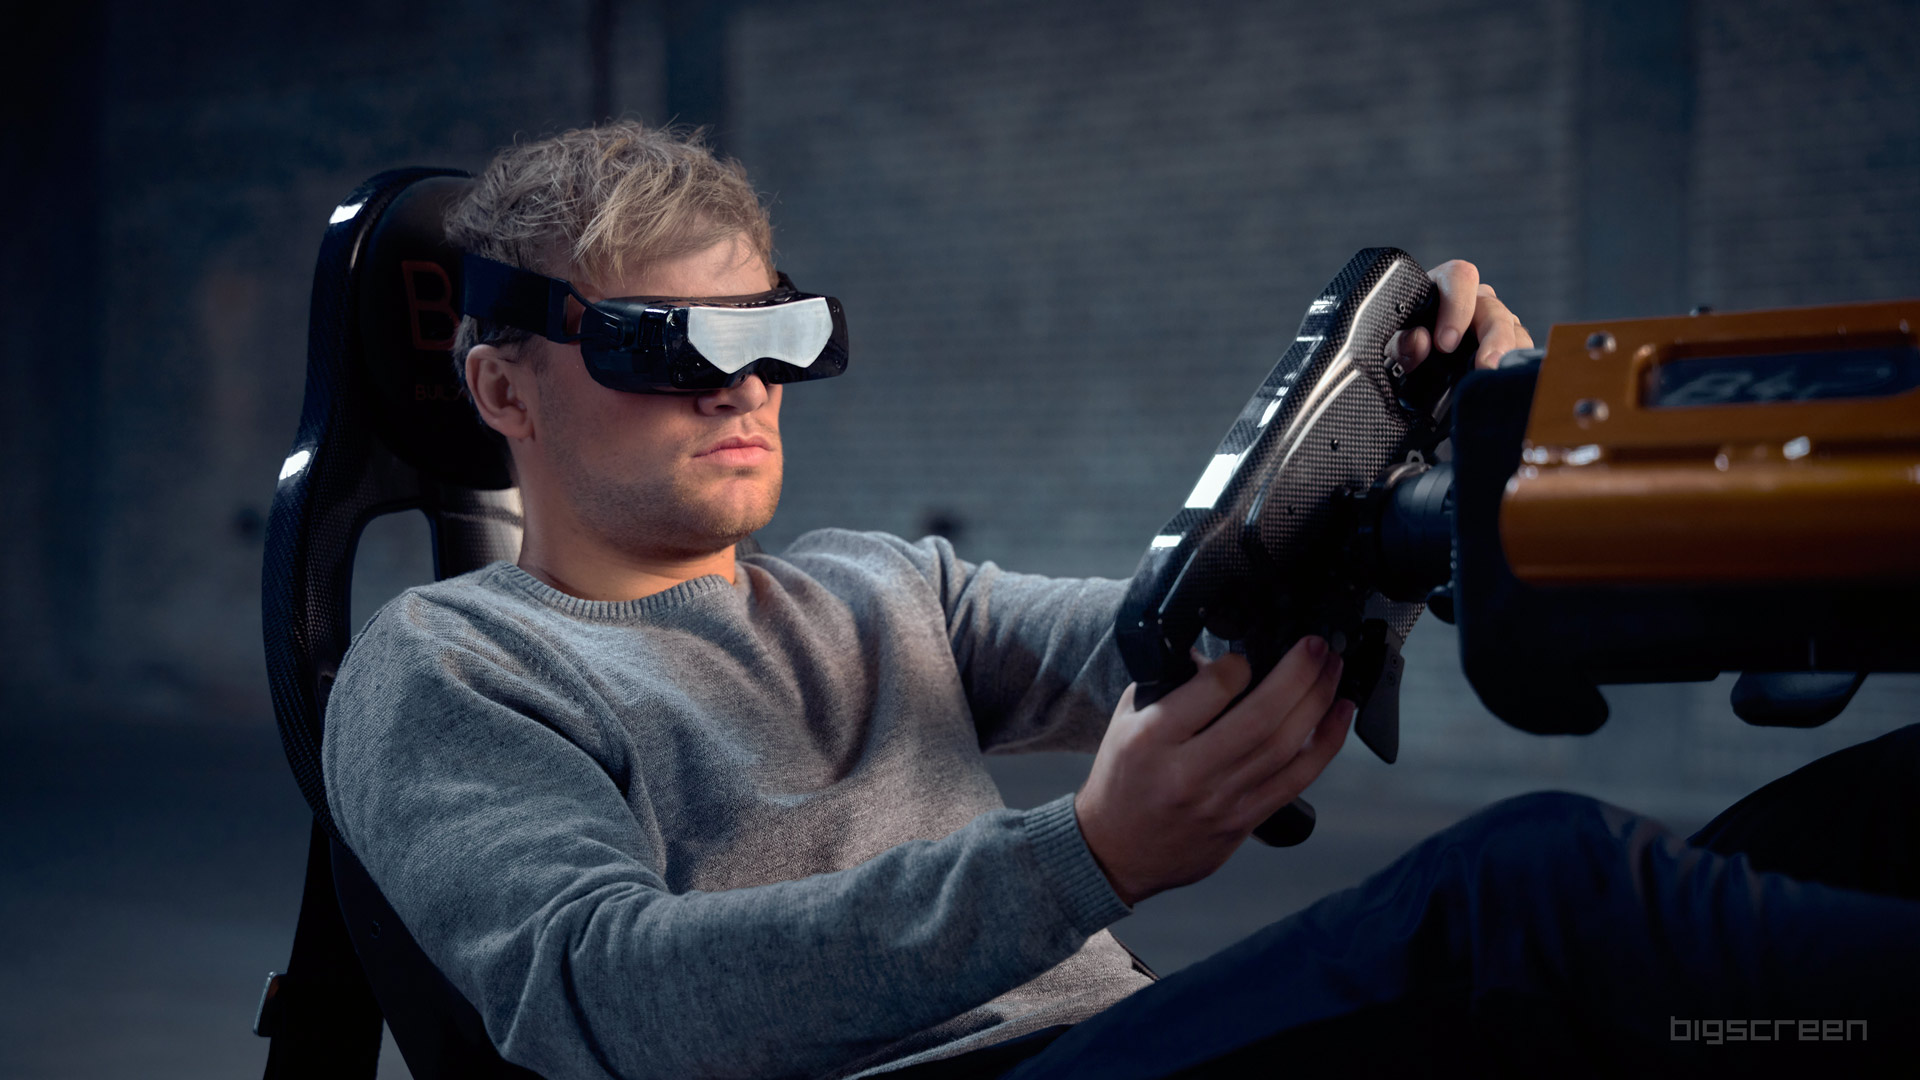 VR Veteran Studio Behind ‘Bigscreen’ Unveils Thin & Light PC VR Headset ‘Beyond’ – Road to VR